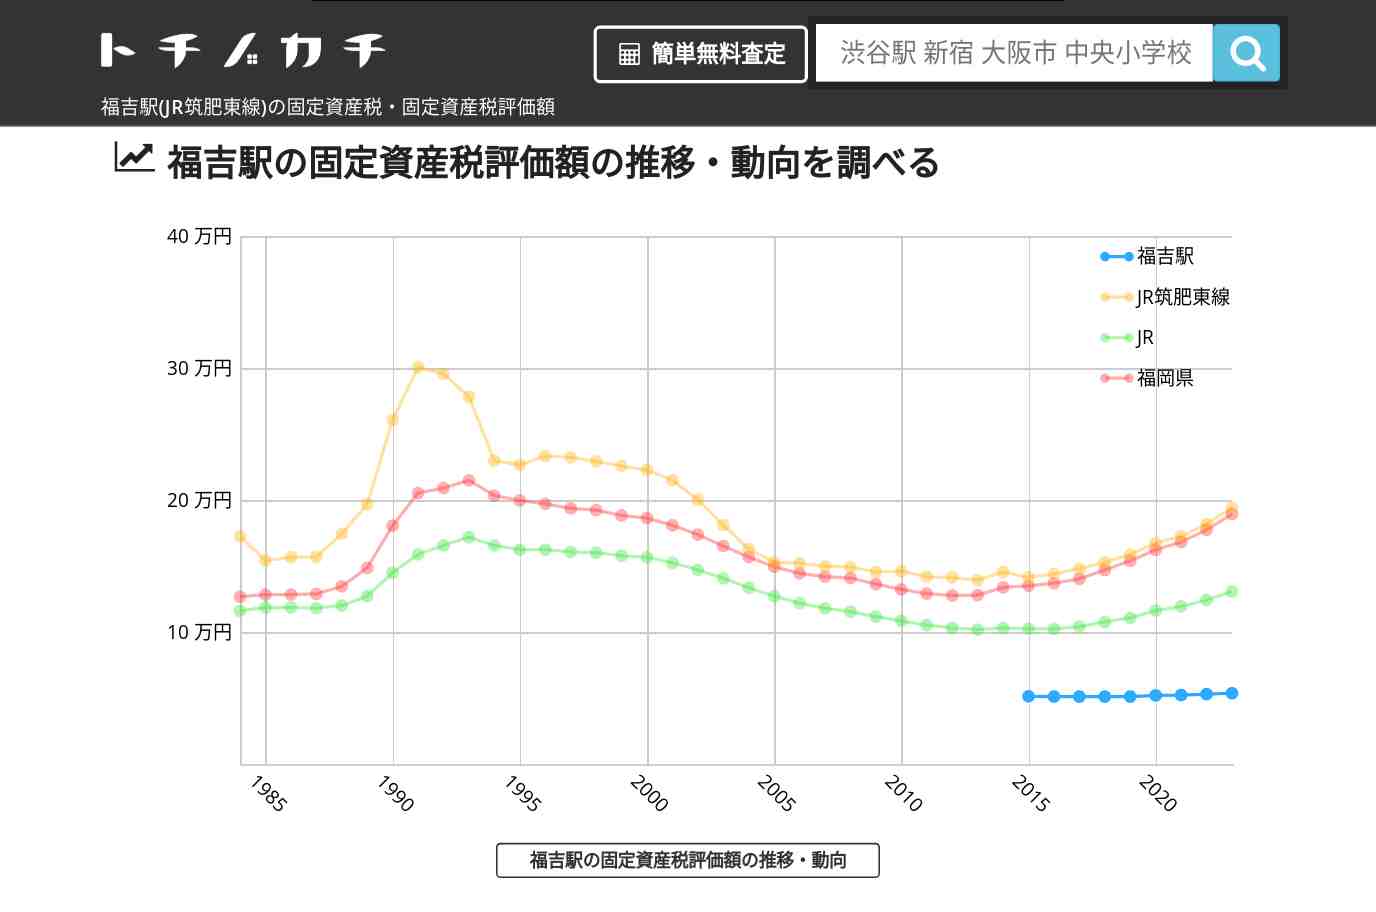 福吉駅(JR筑肥東線)の固定資産税・固定資産税評価額 | トチノカチ